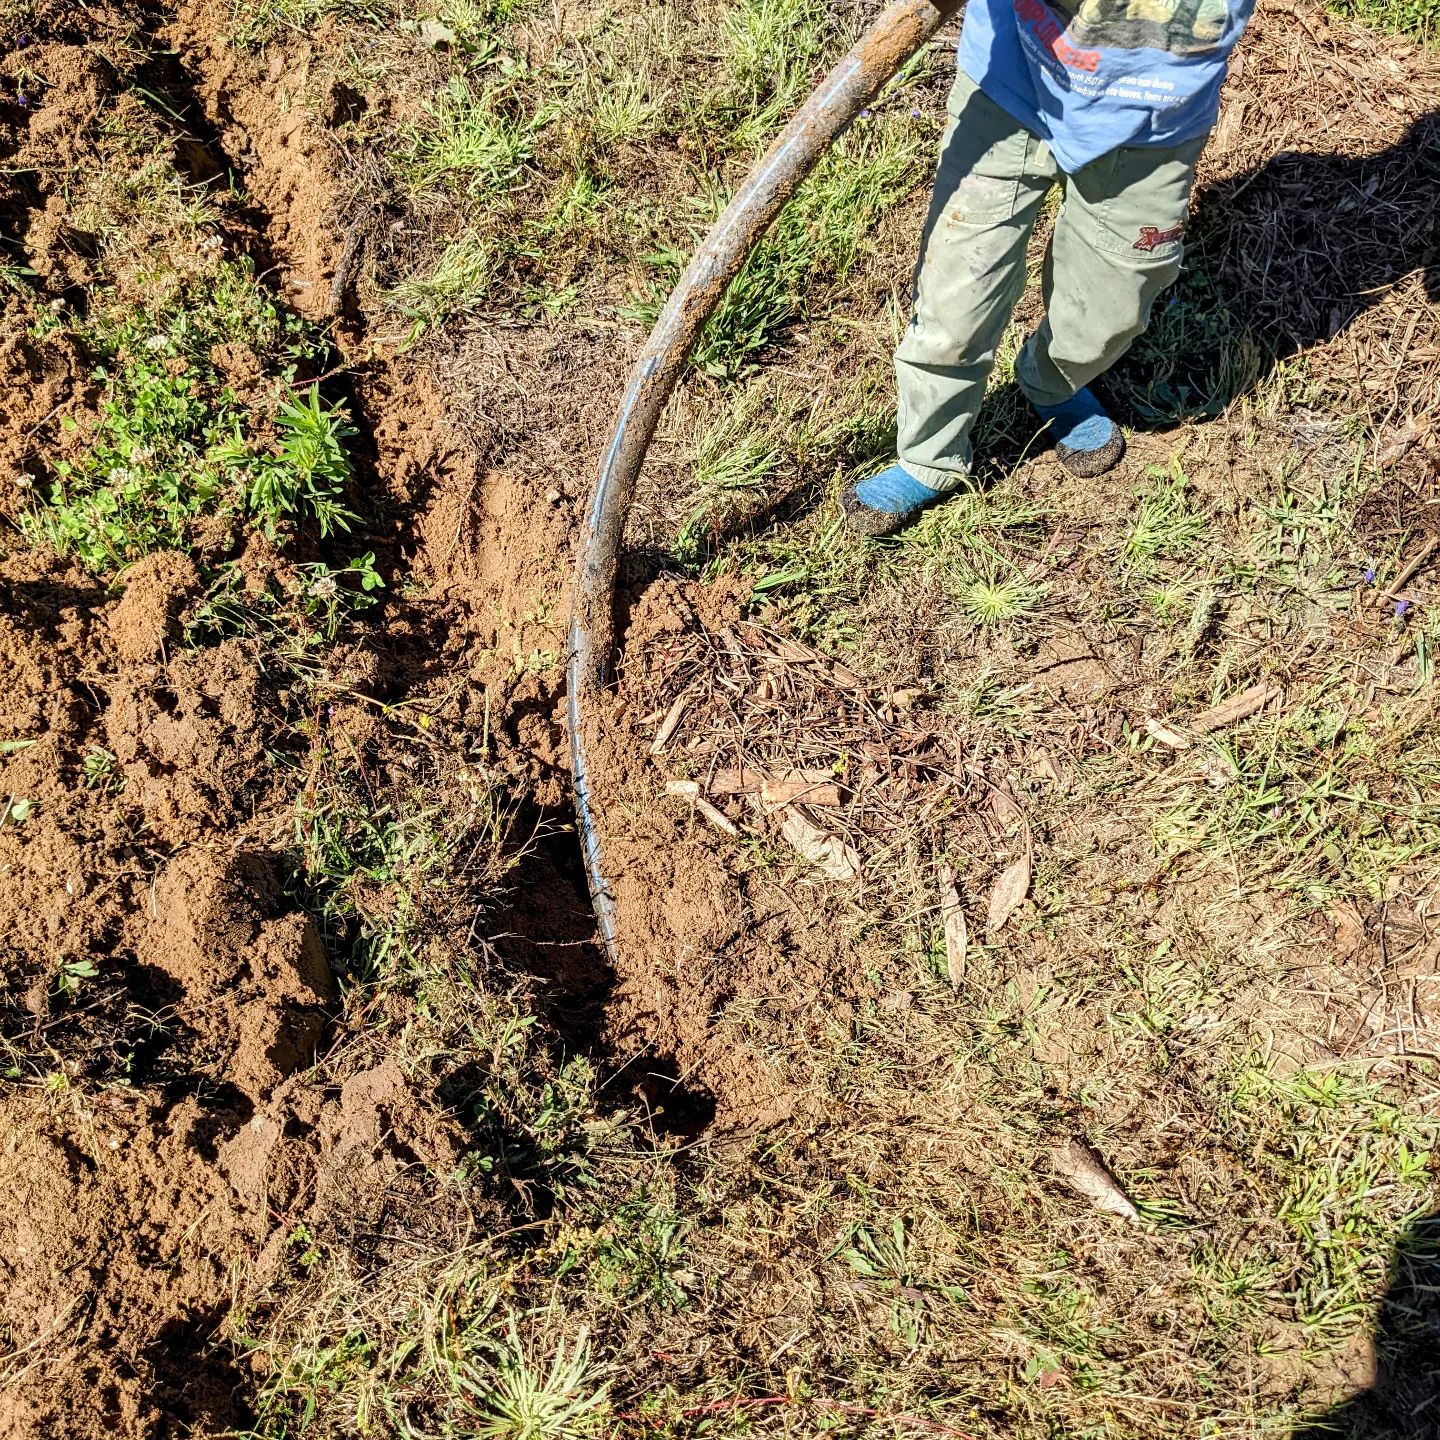 Digging up the old #irrigation mainline